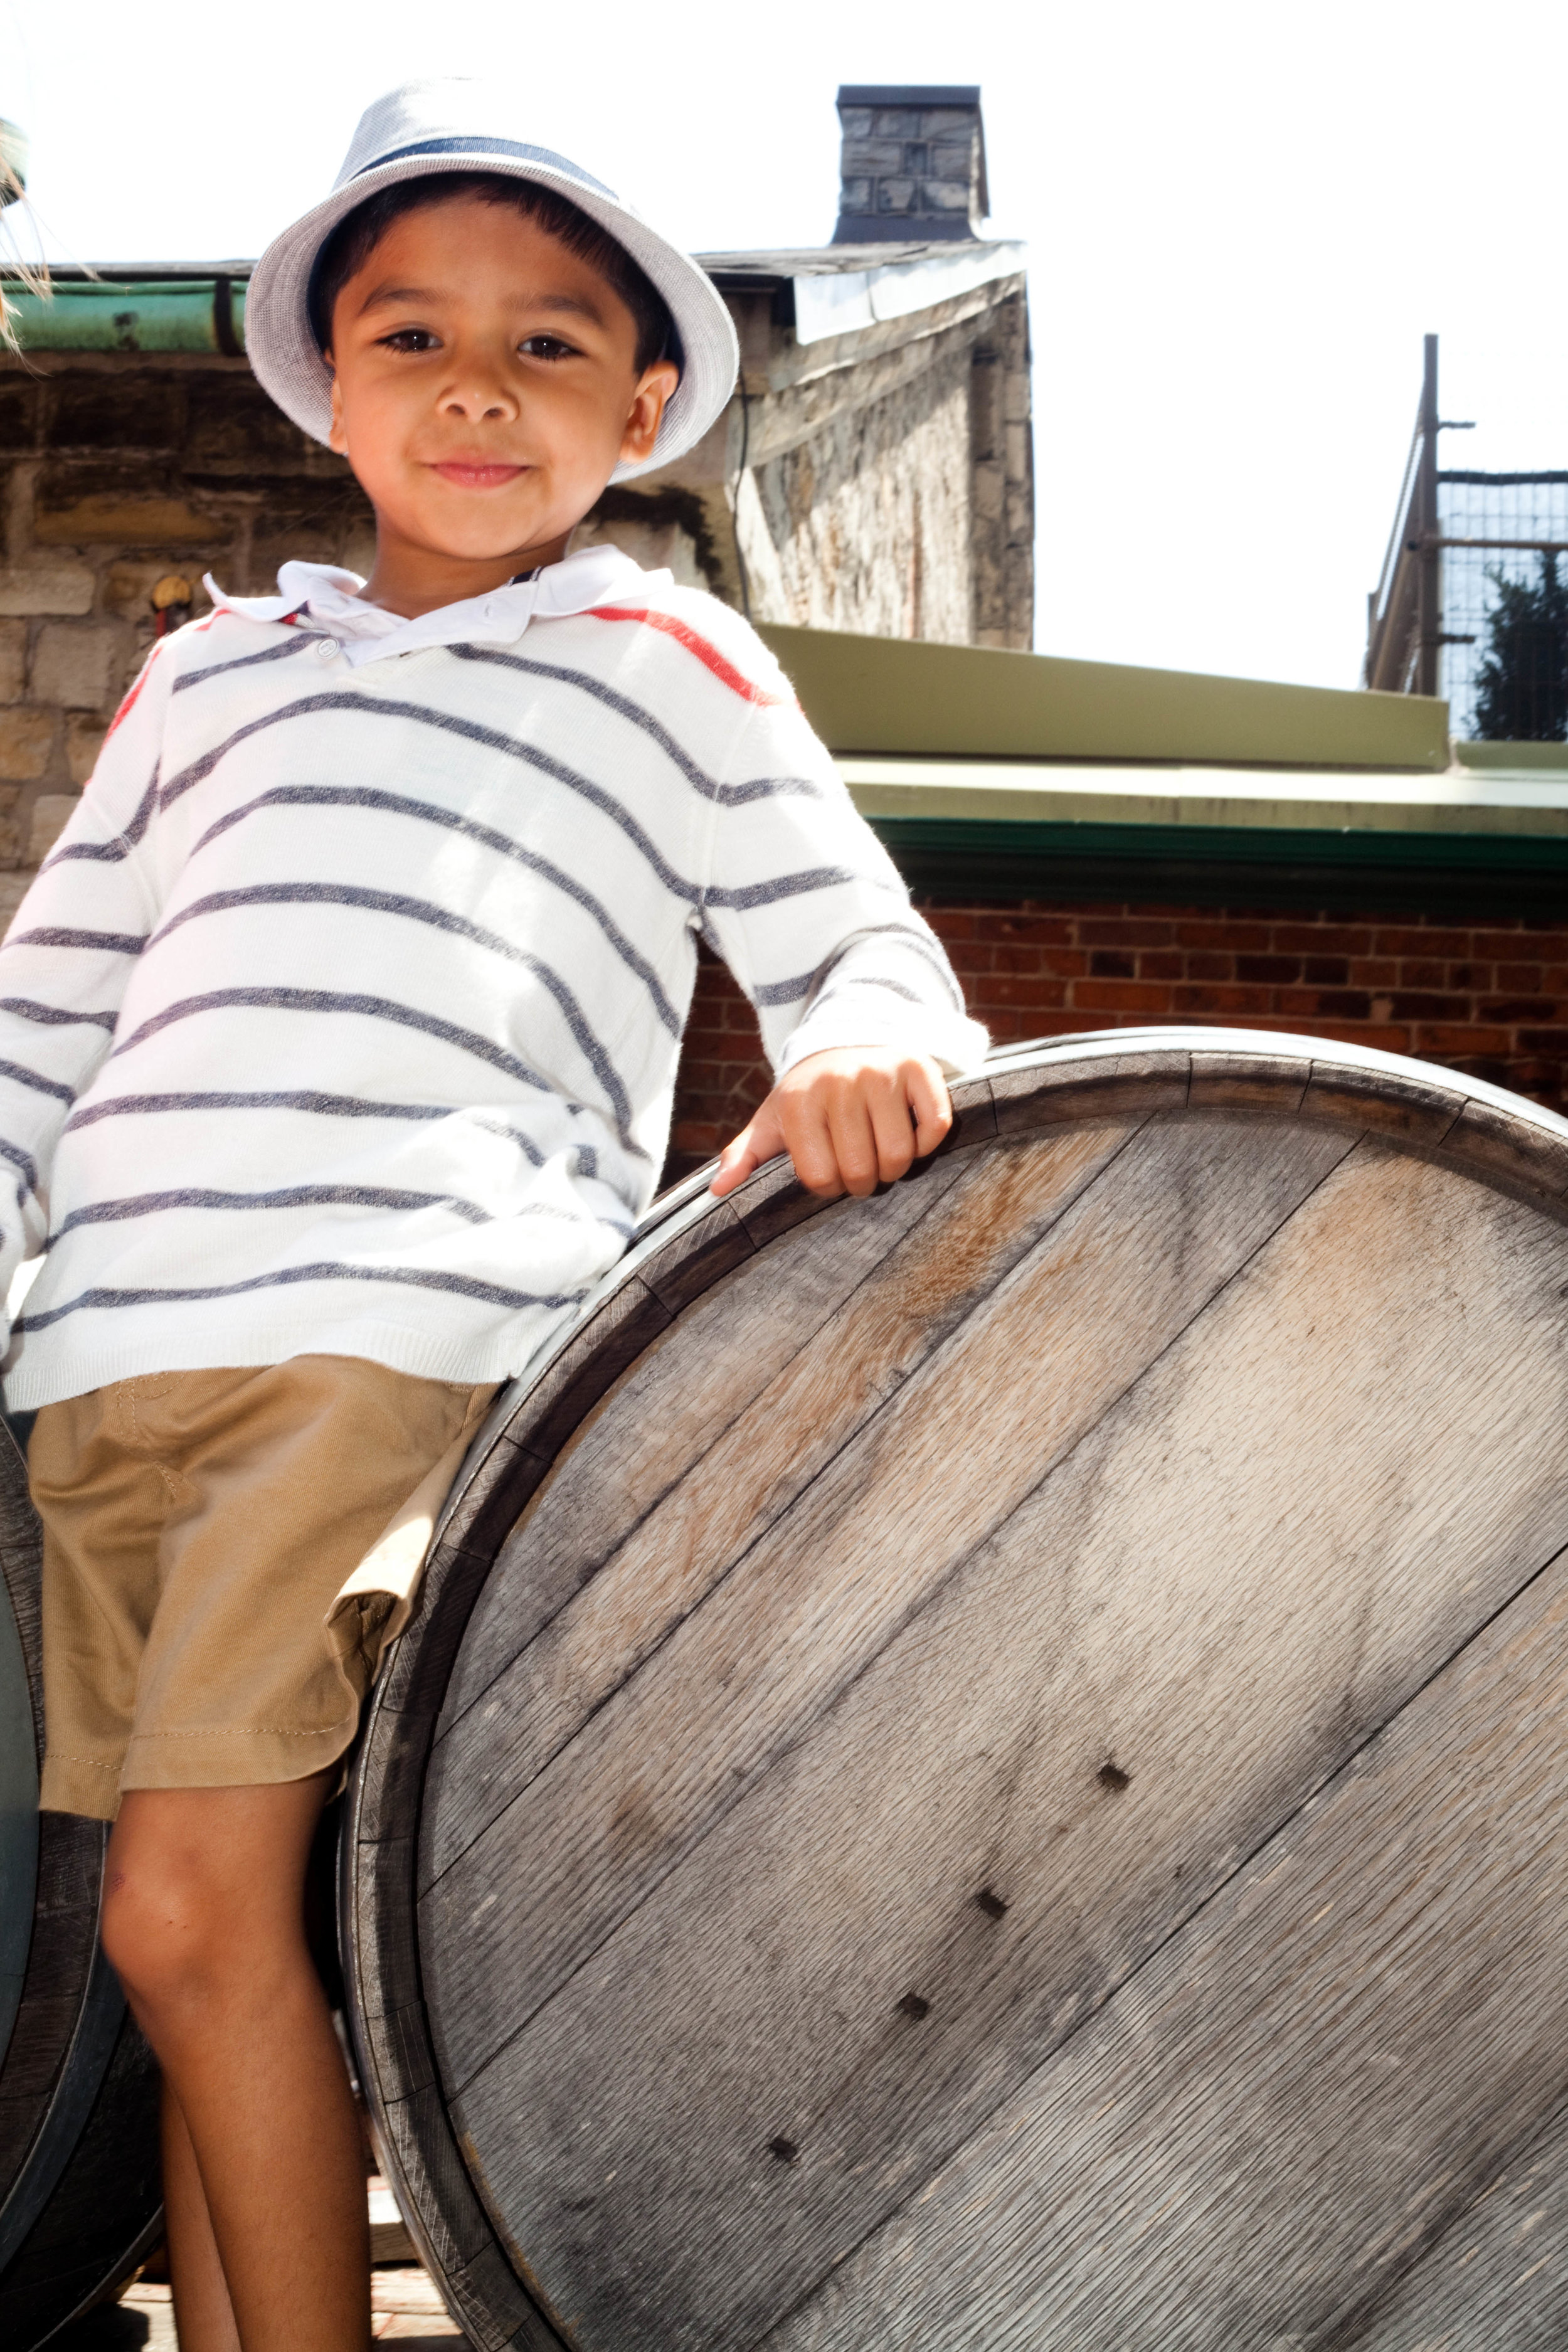 boy and a barrel